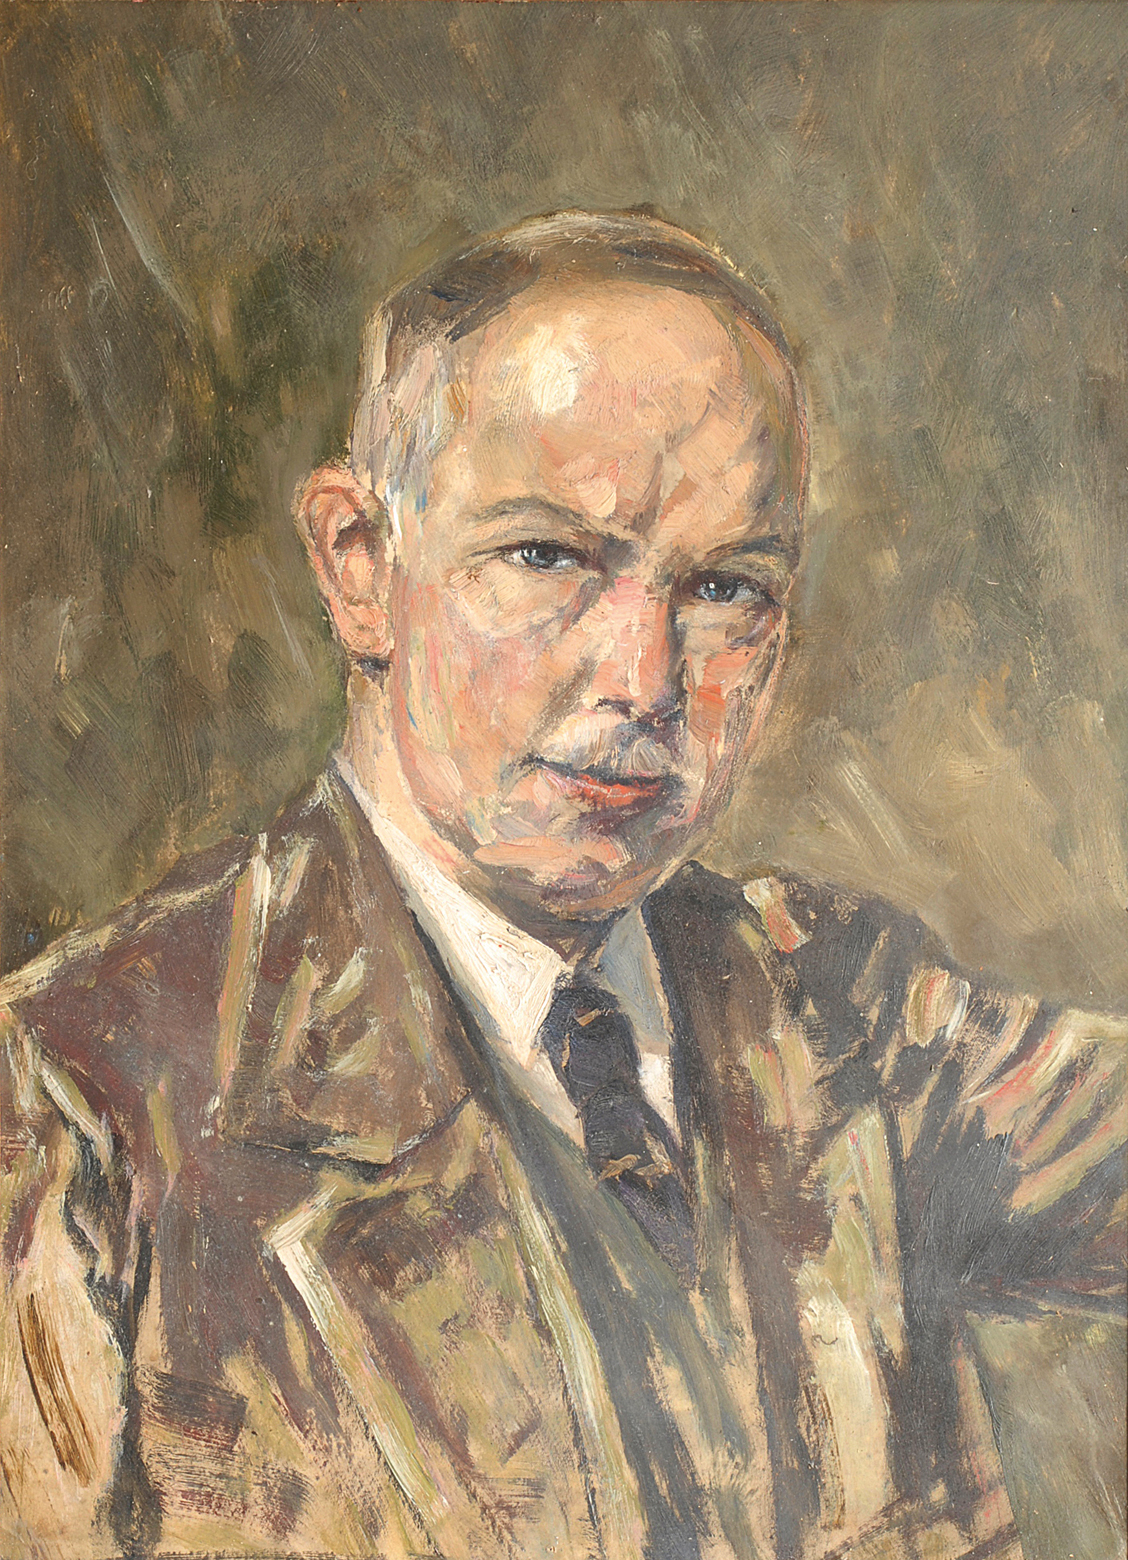 A portrait of a man in a suit